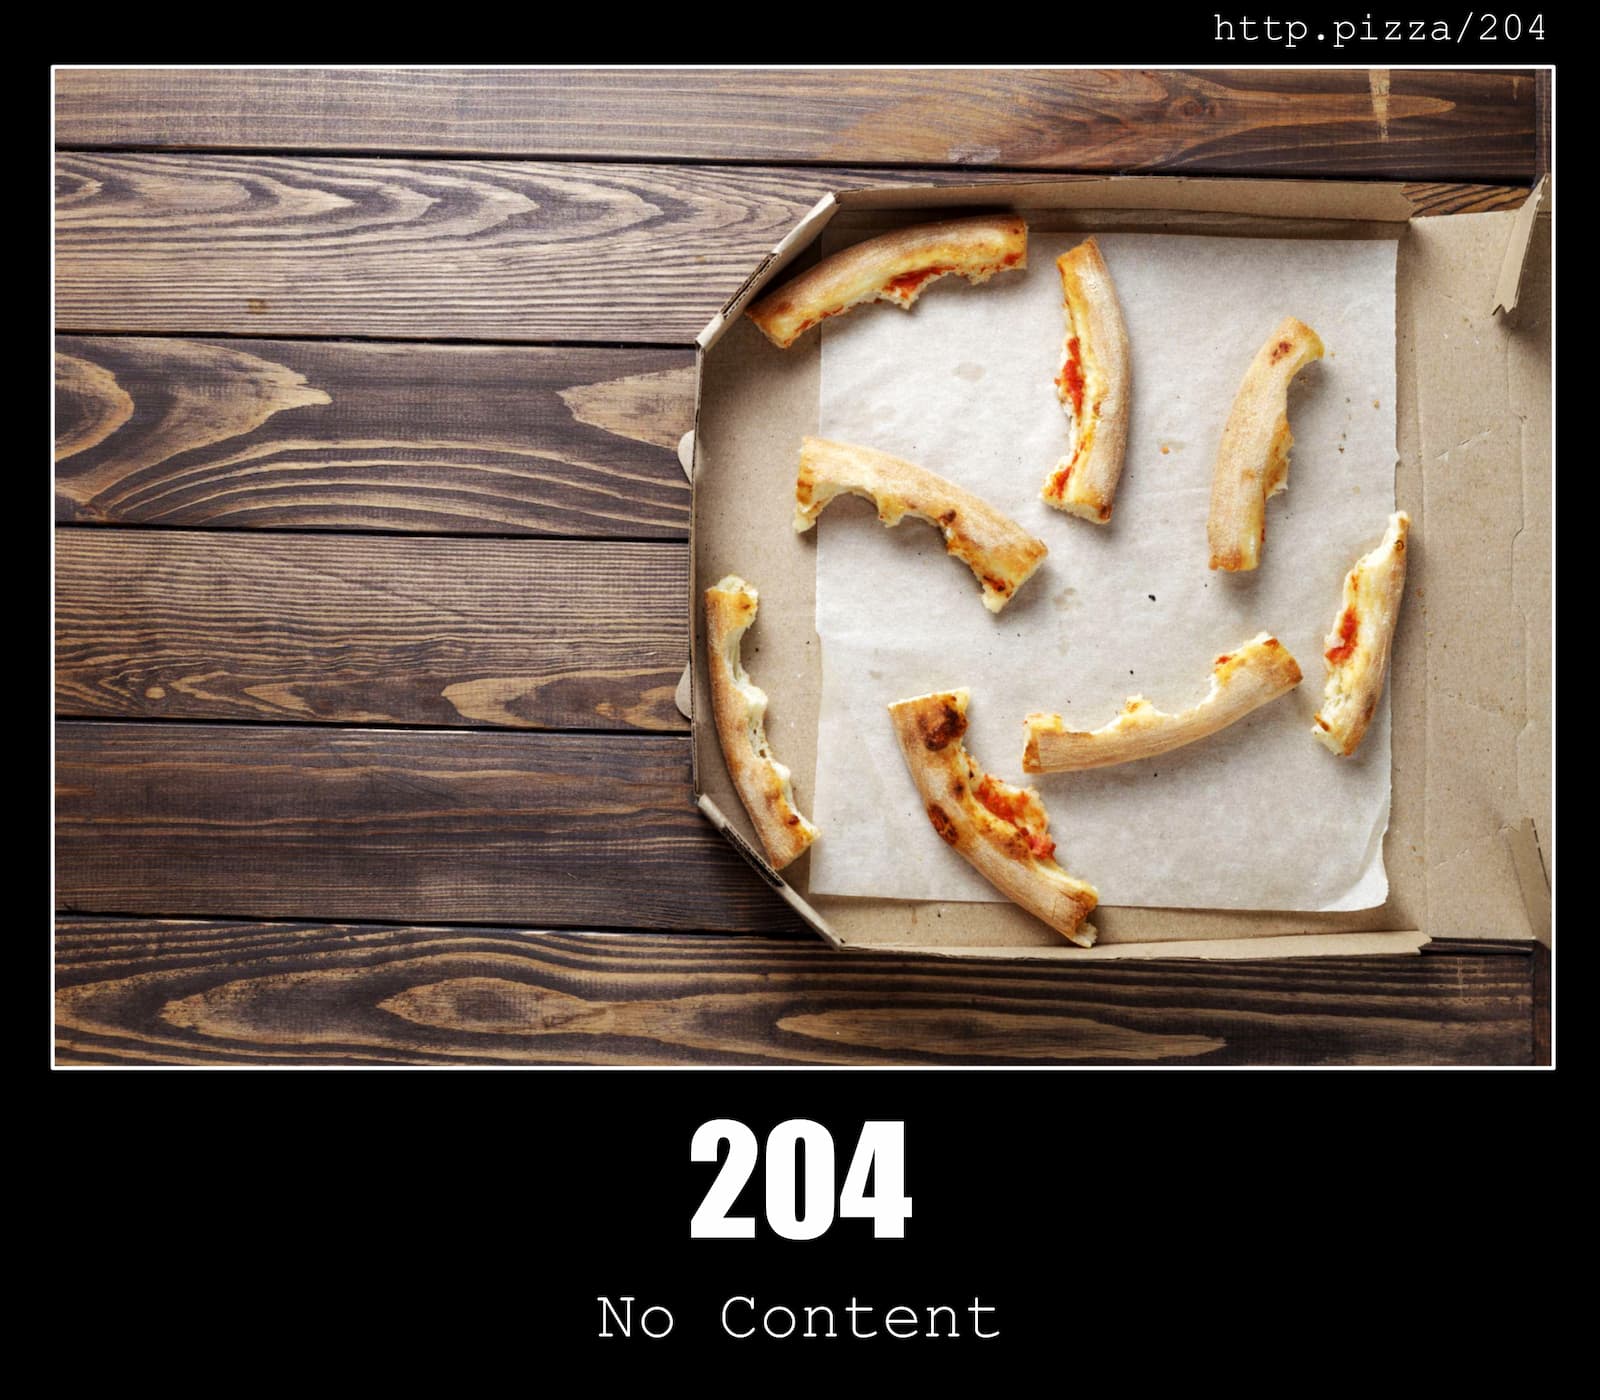 HTTP Status Code 204 No Content & Pizzas